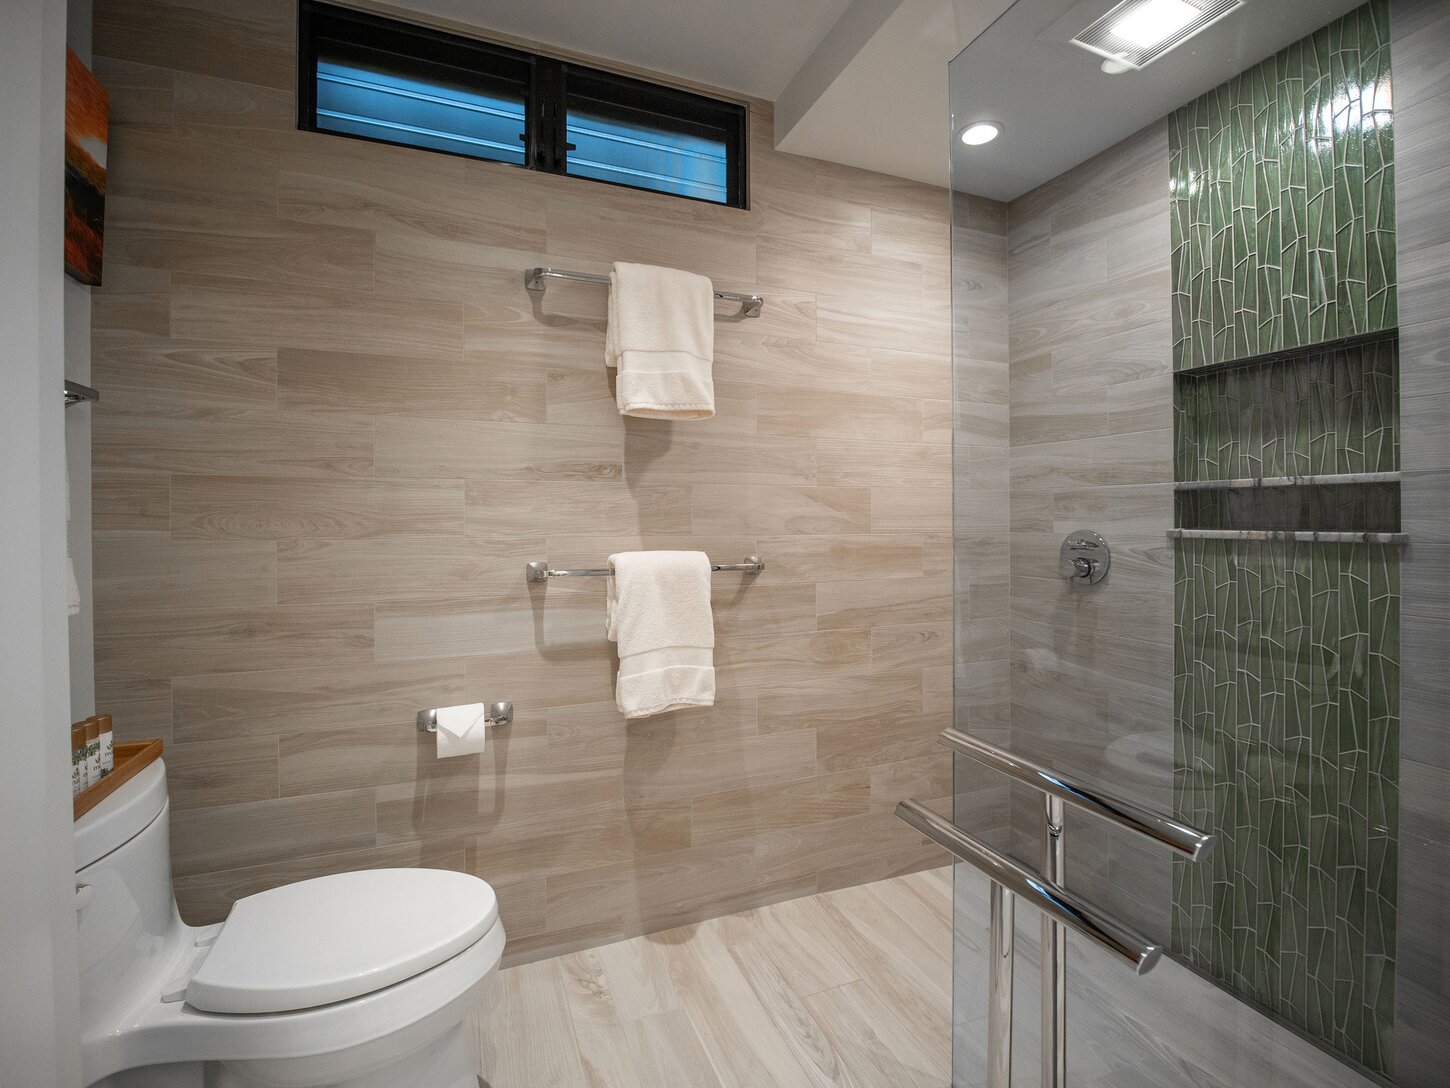 Master bathroom also features a large, doorless, no-threshold, walk-in shower